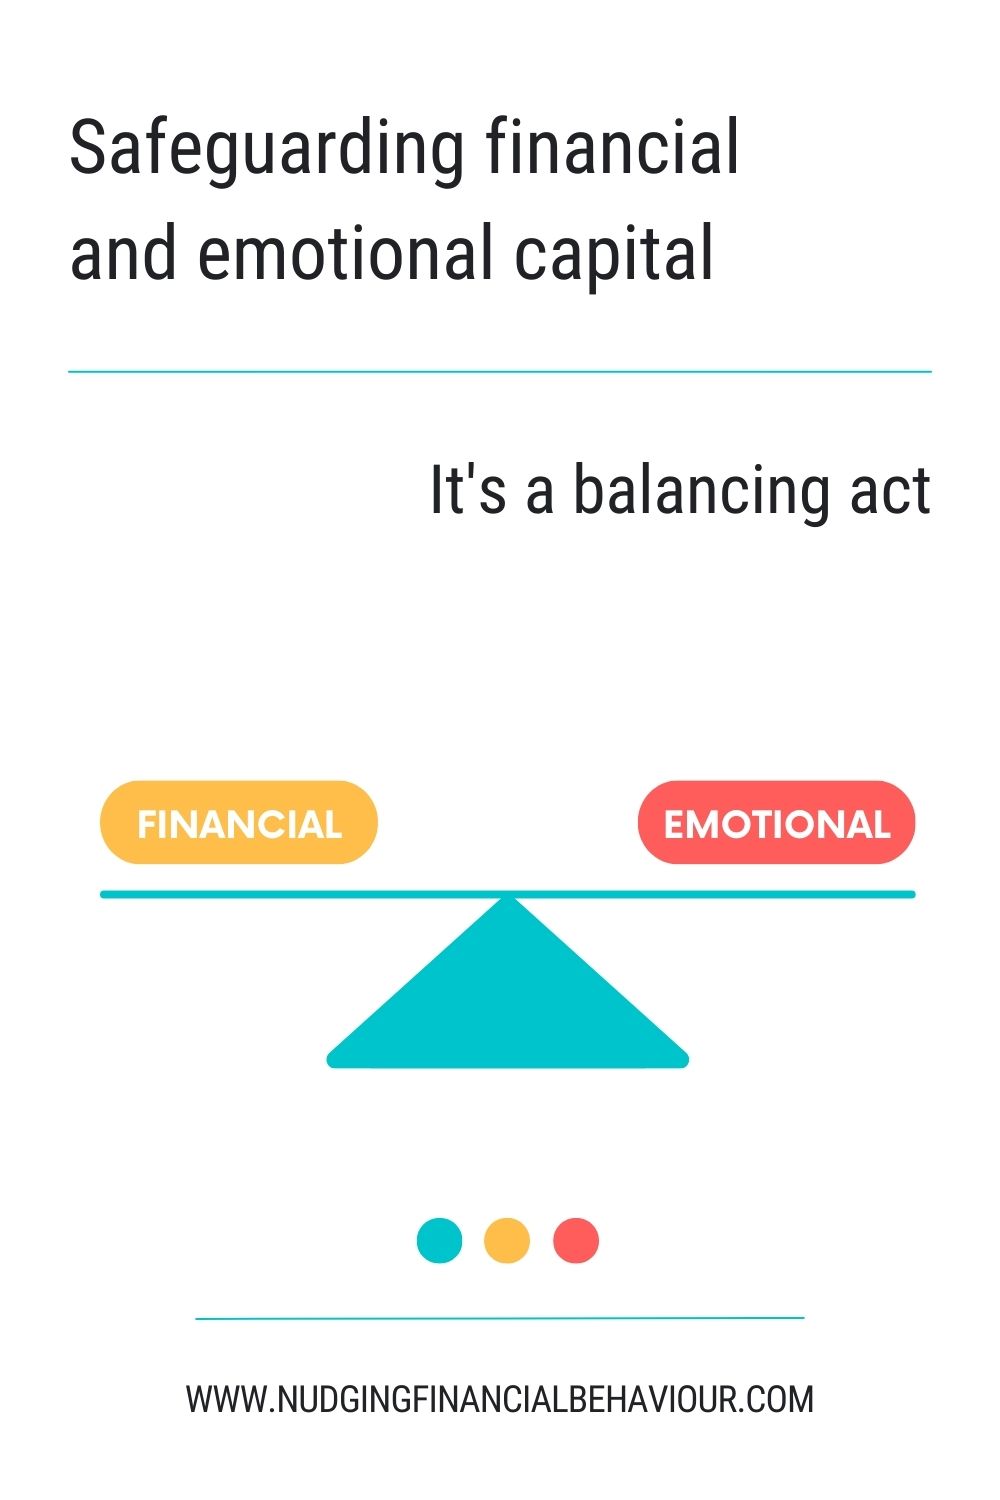 Safeguarding financial and emotional capital